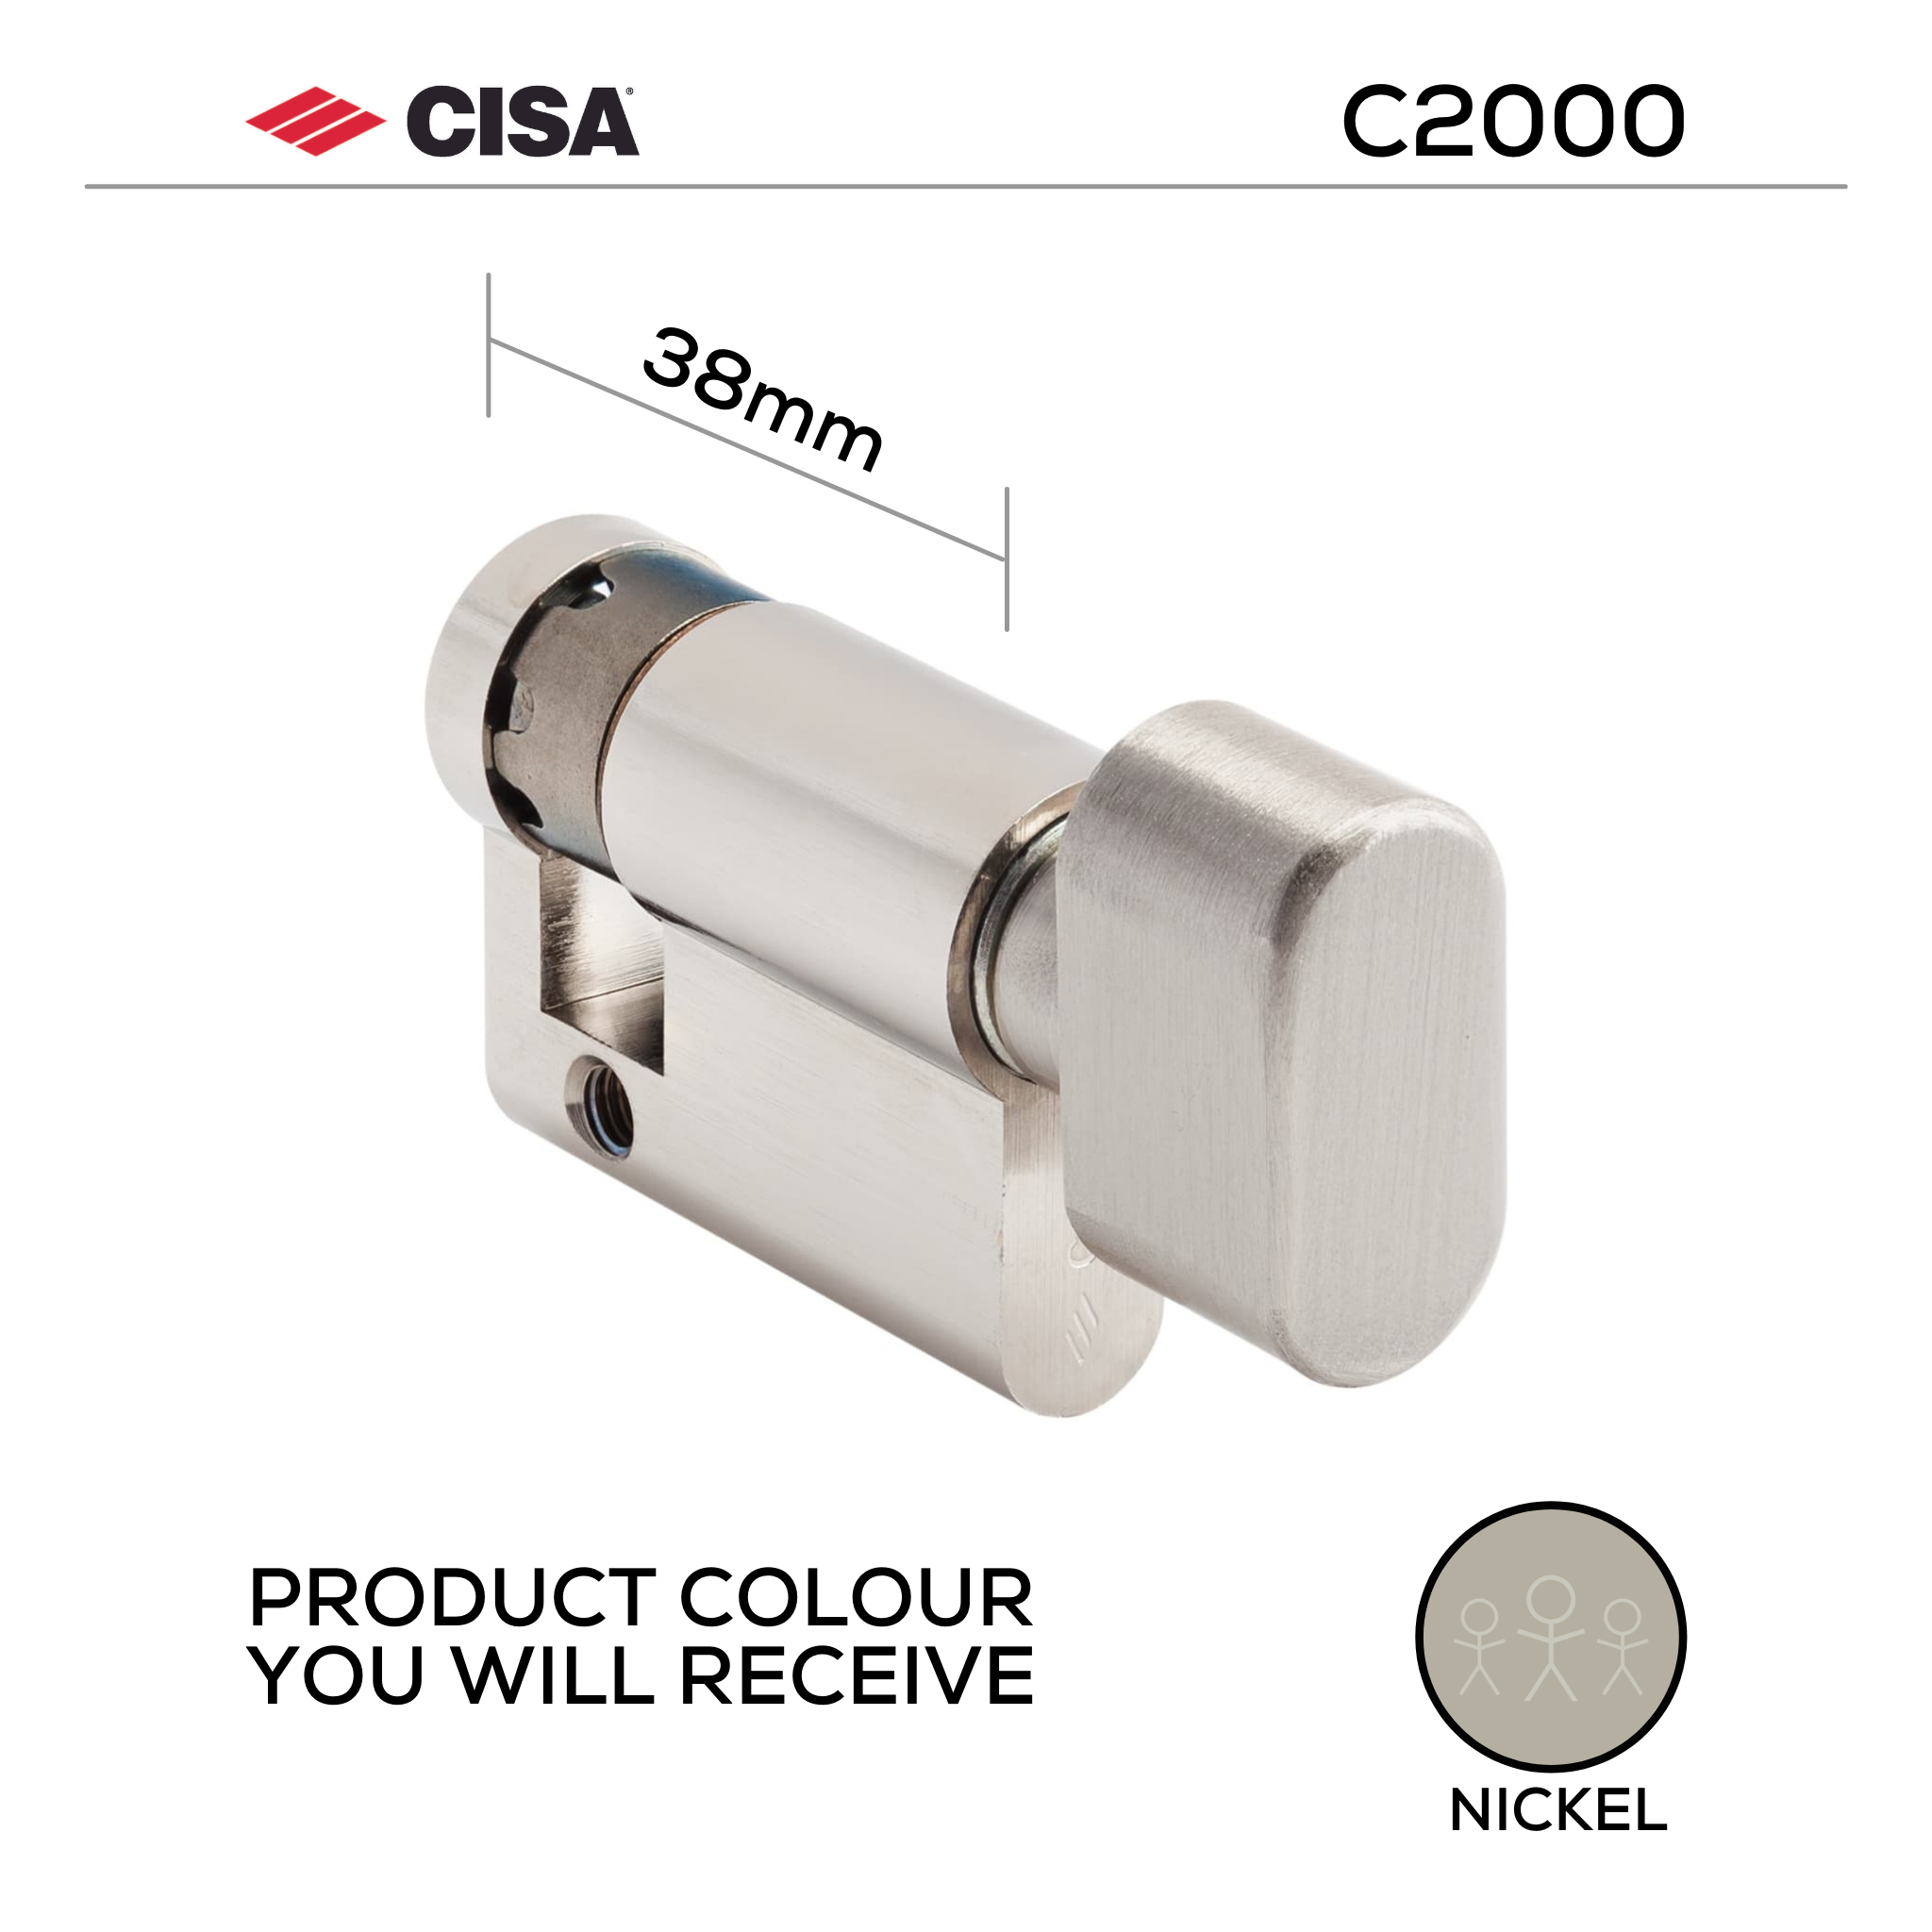 08220-02-12-KD, 38mm - 27.7/10.3, Half (Single Cylinder), C2000, Key, Keyed to Differ (Standard), Nickel, CISA